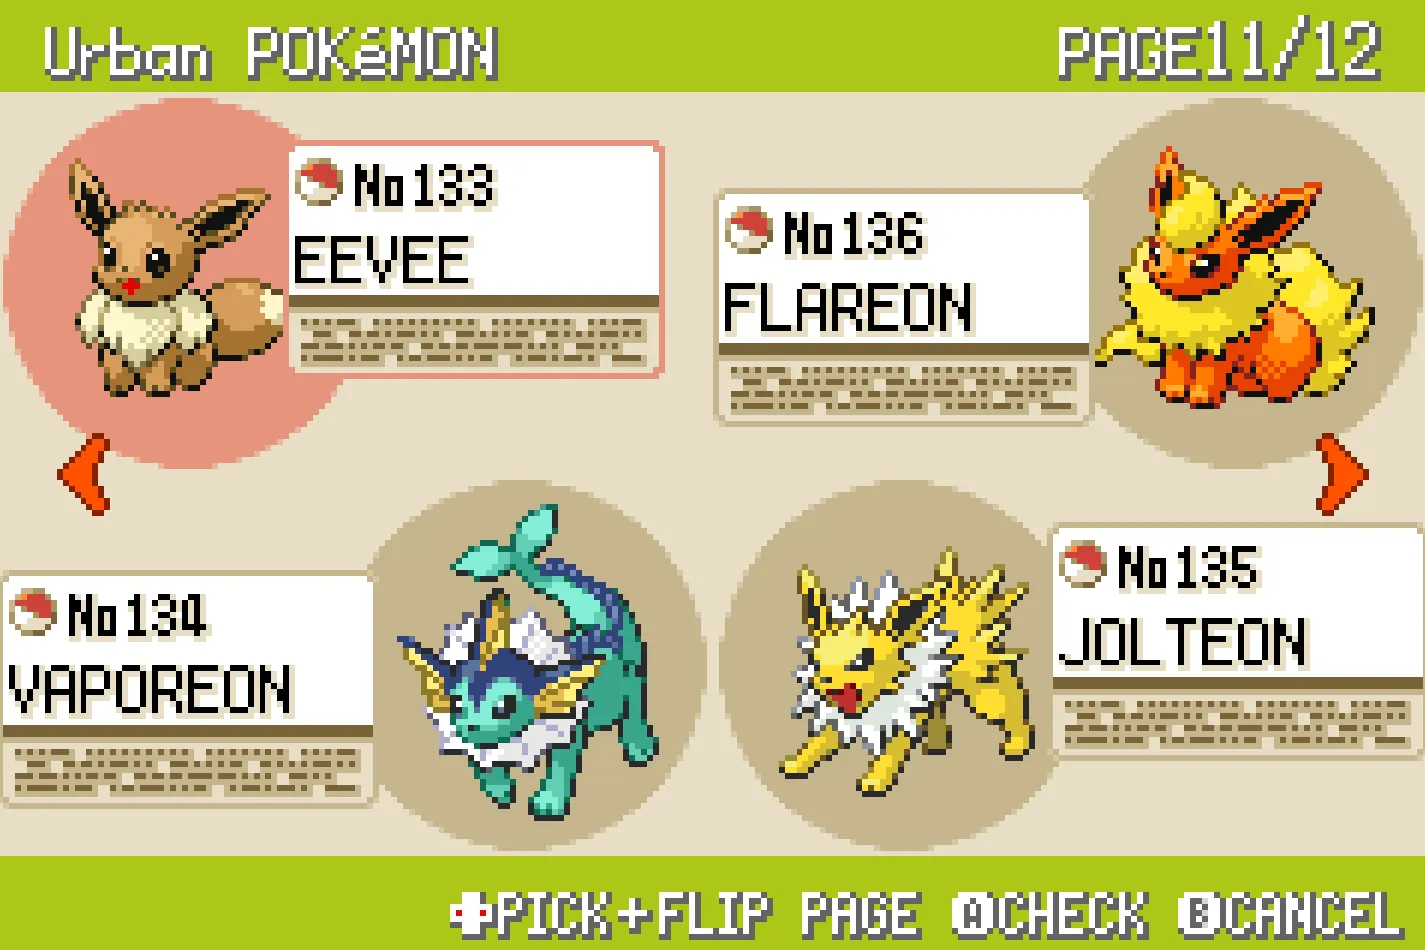 Pokémon X and Y Pokémon FireRed and LeafGreen Pokémon GO Eevee